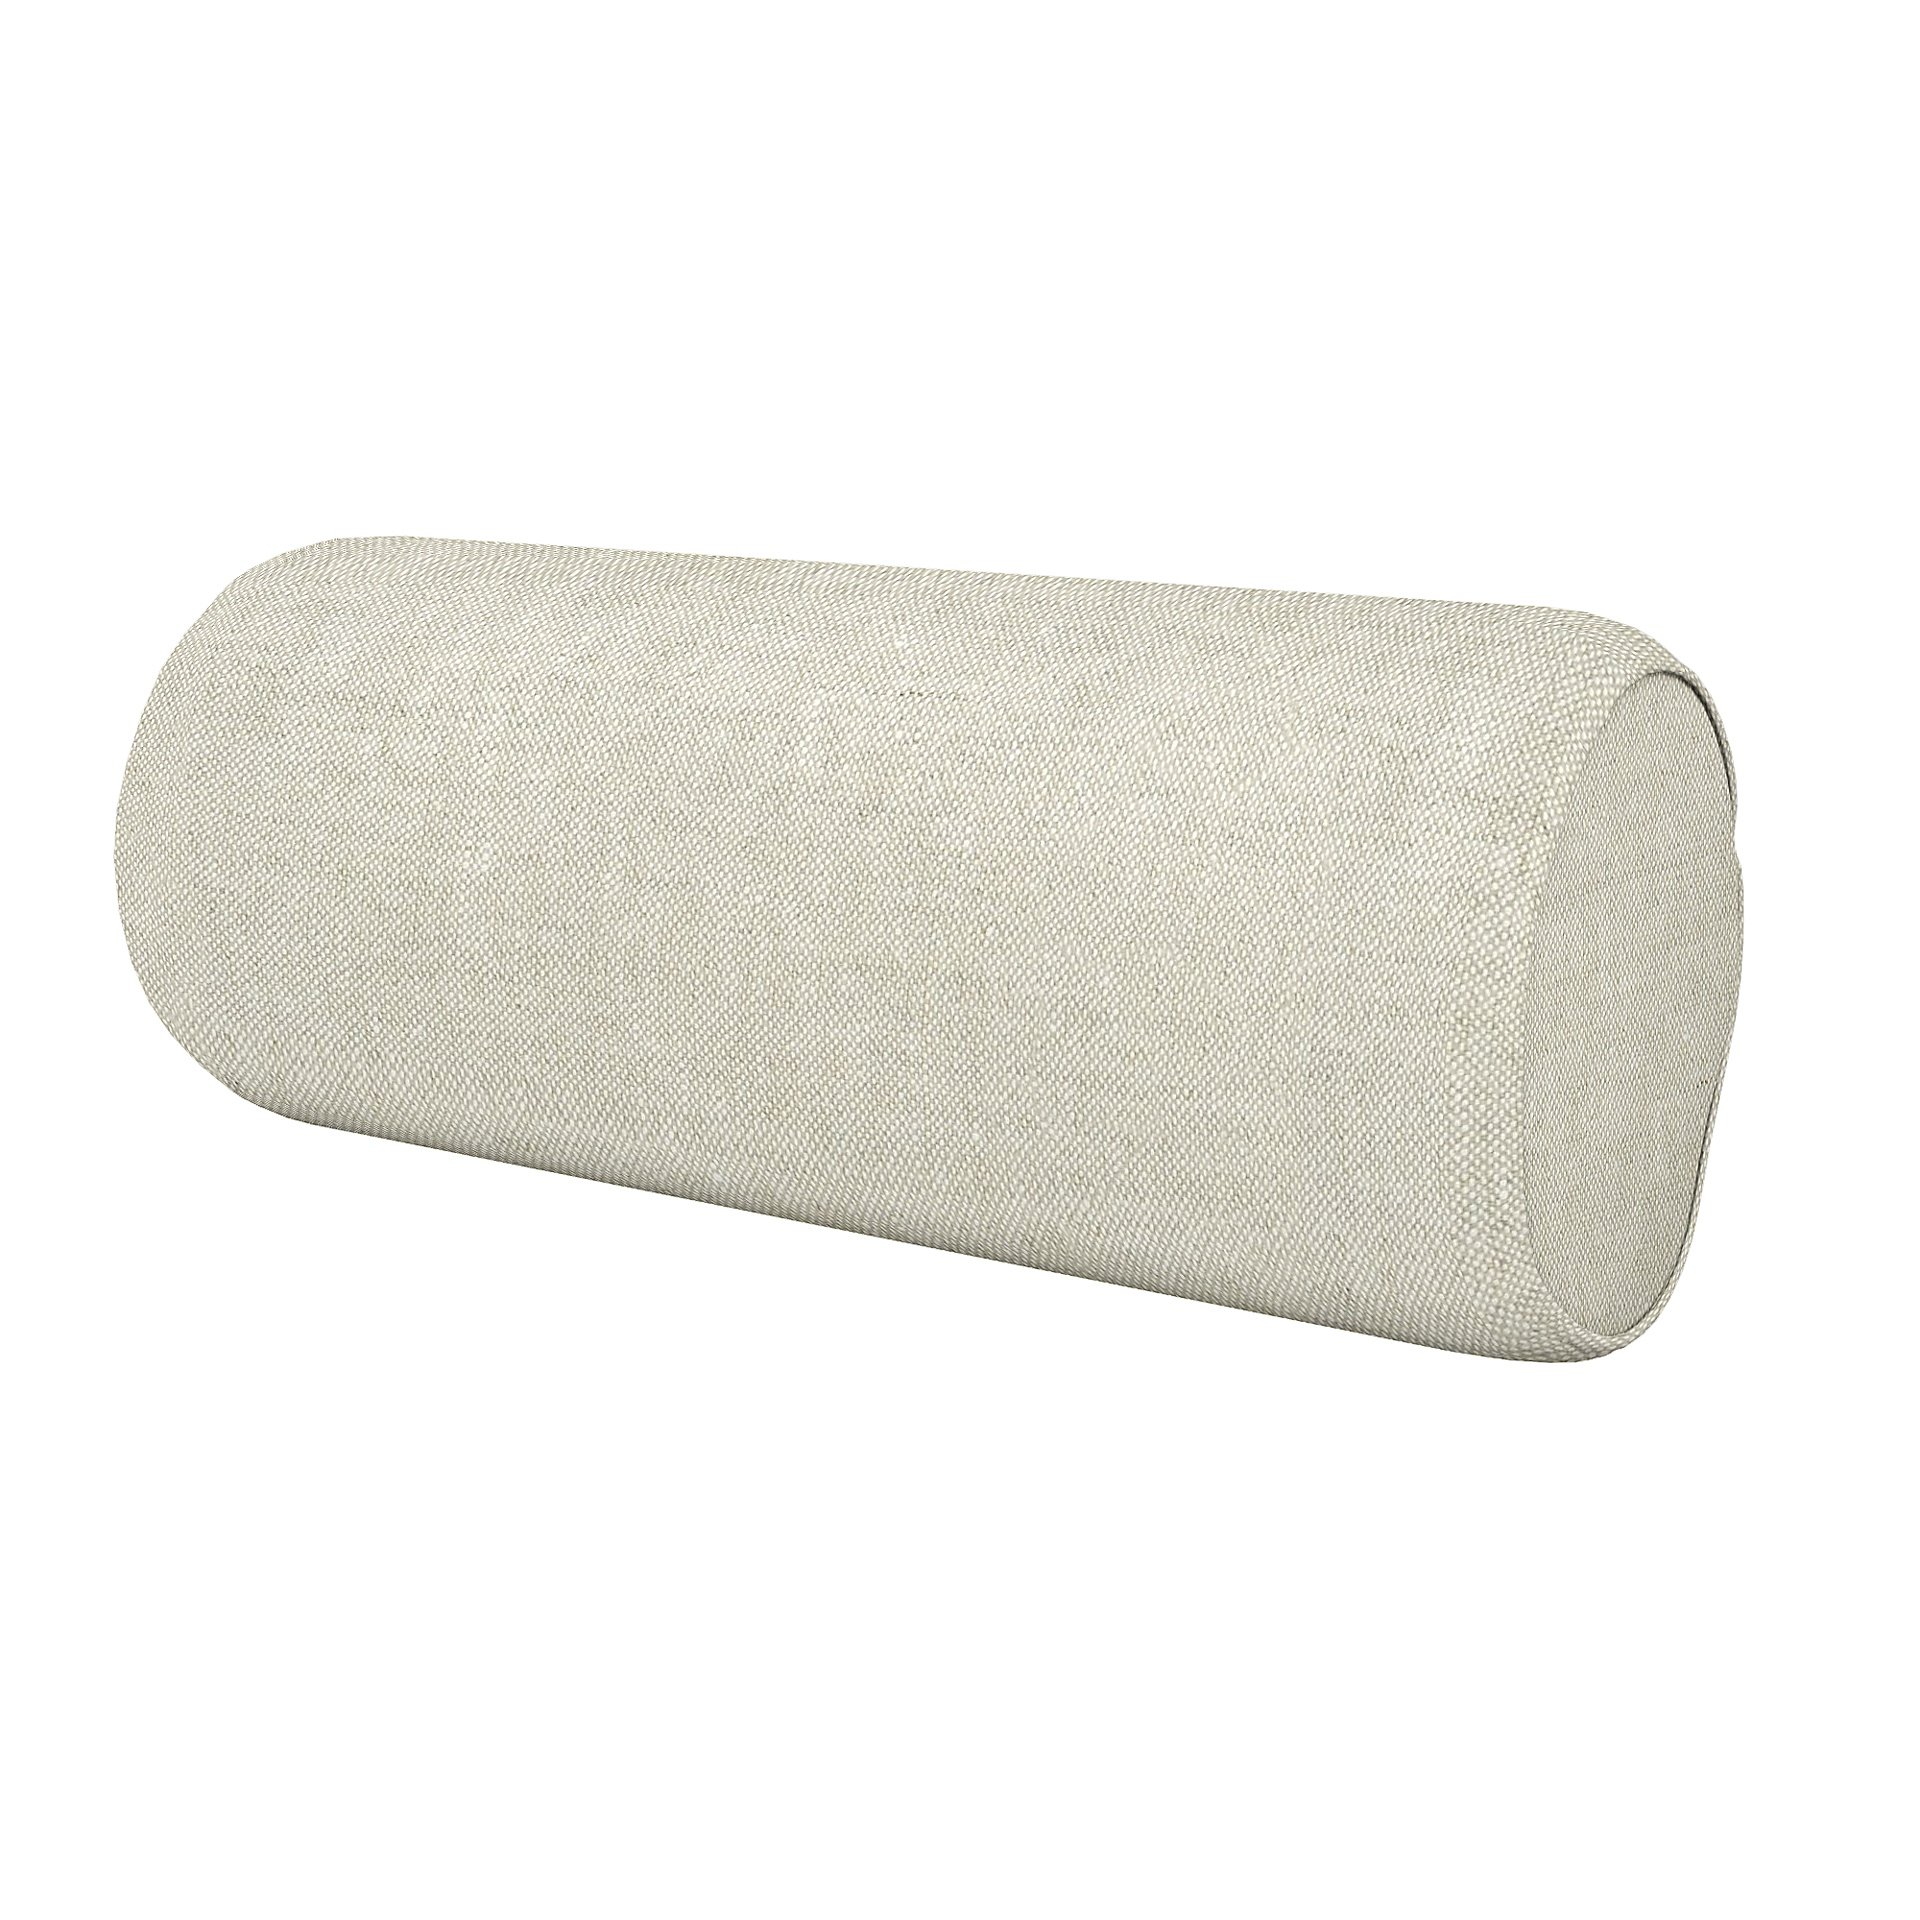 IKEA - Cushion Cover Ektorp Roll , Natural, Linen - Bemz